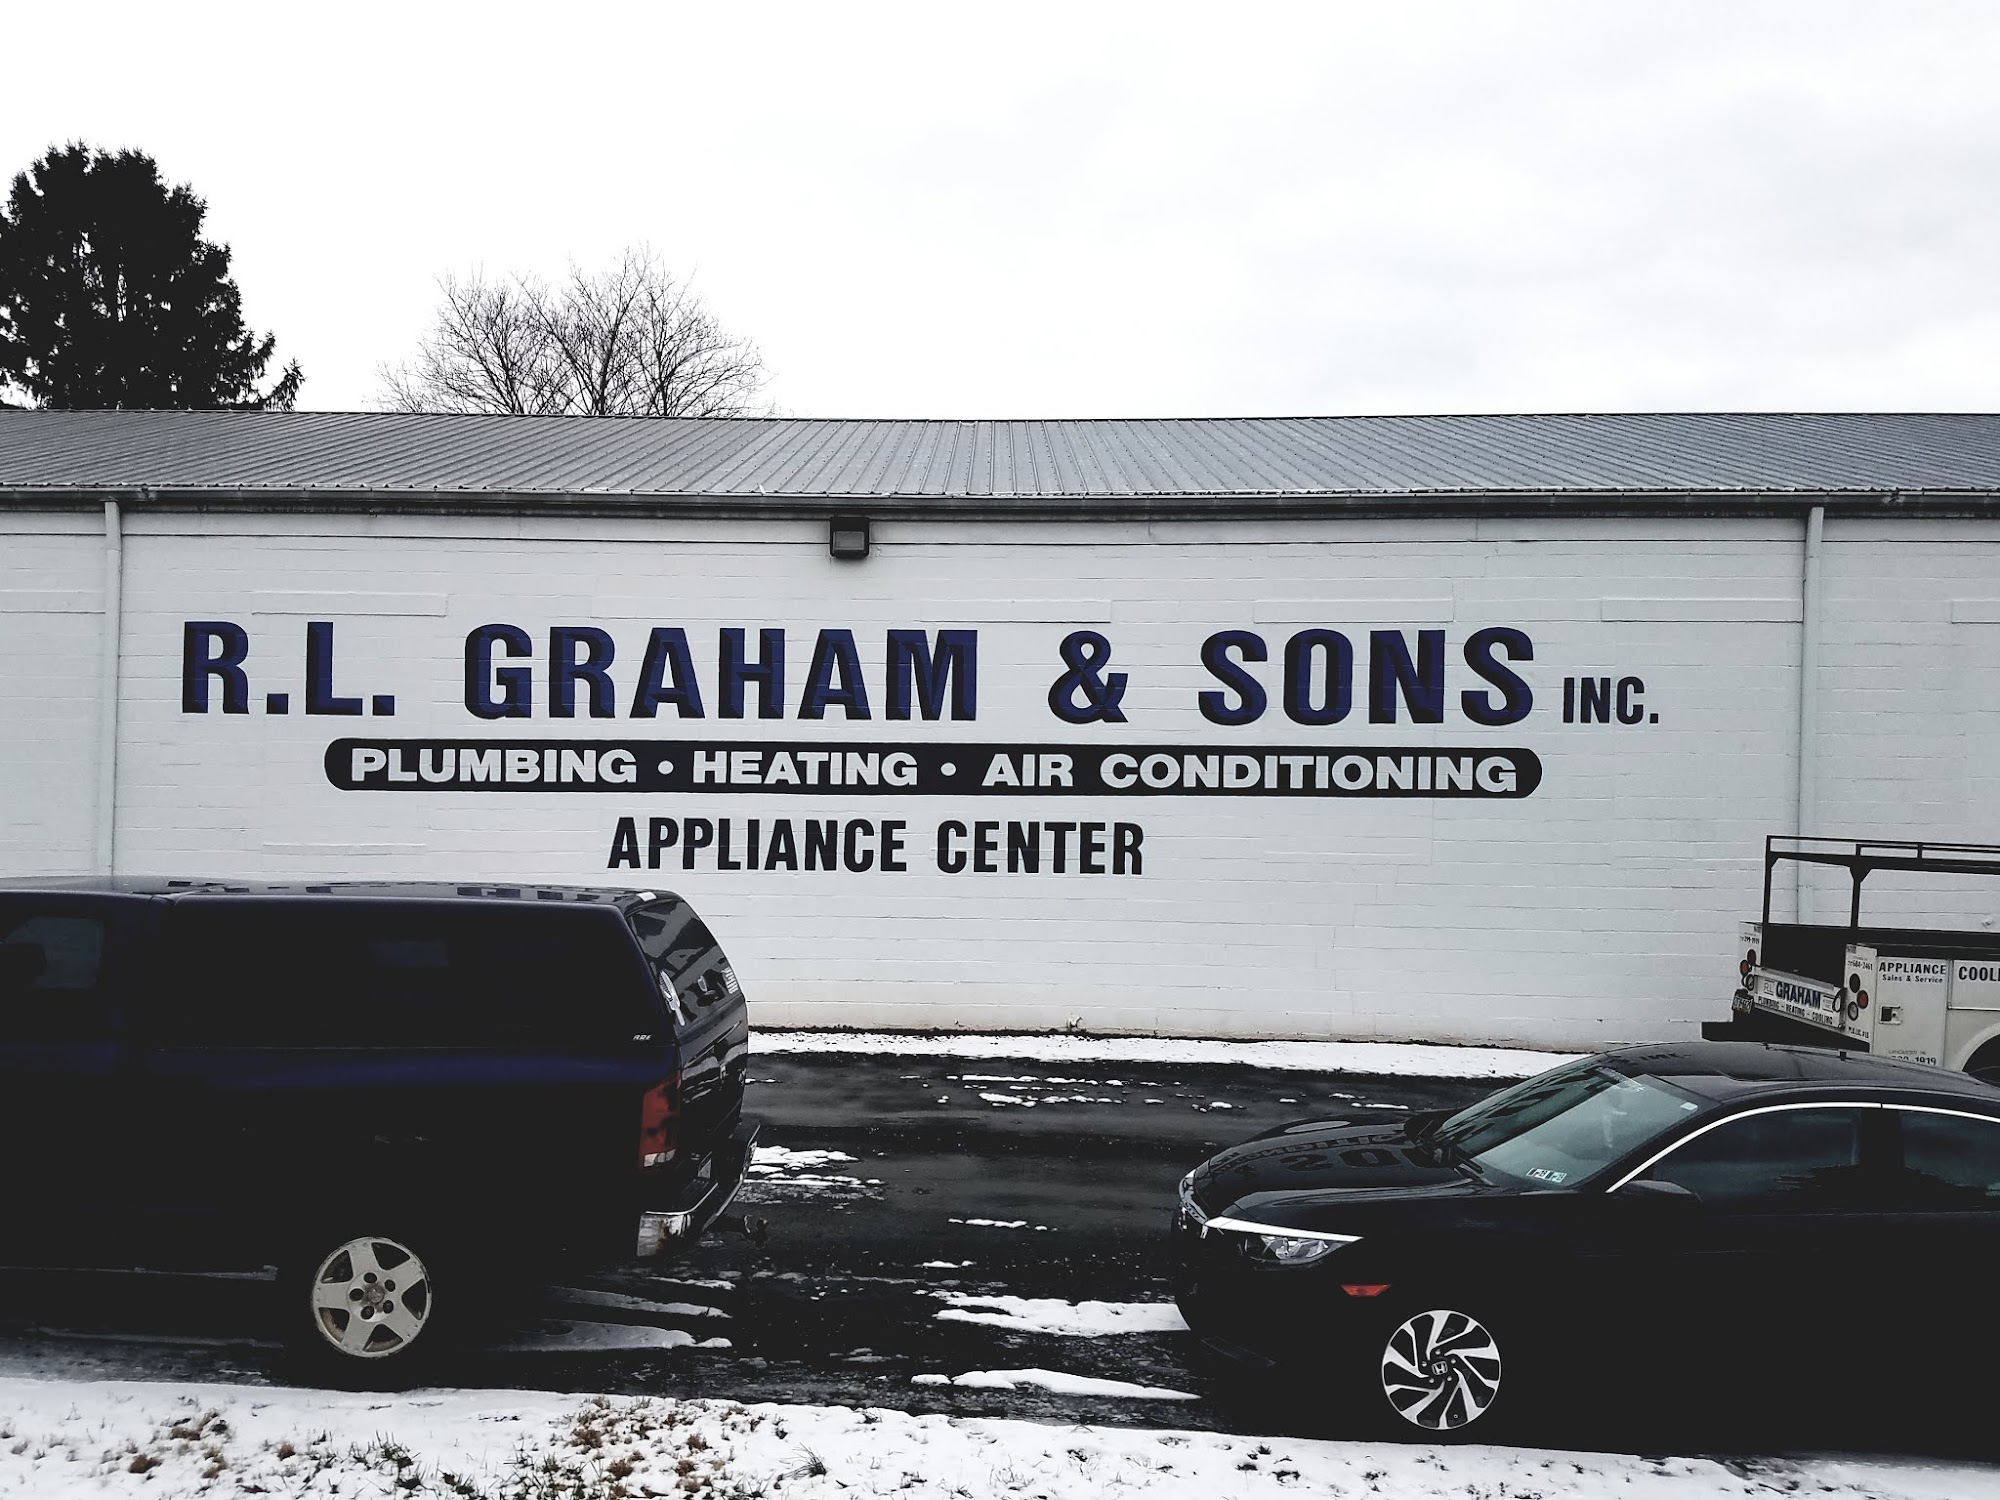 R L Graham & Sons Inc 602 S 16th St, Columbia Pennsylvania 17512